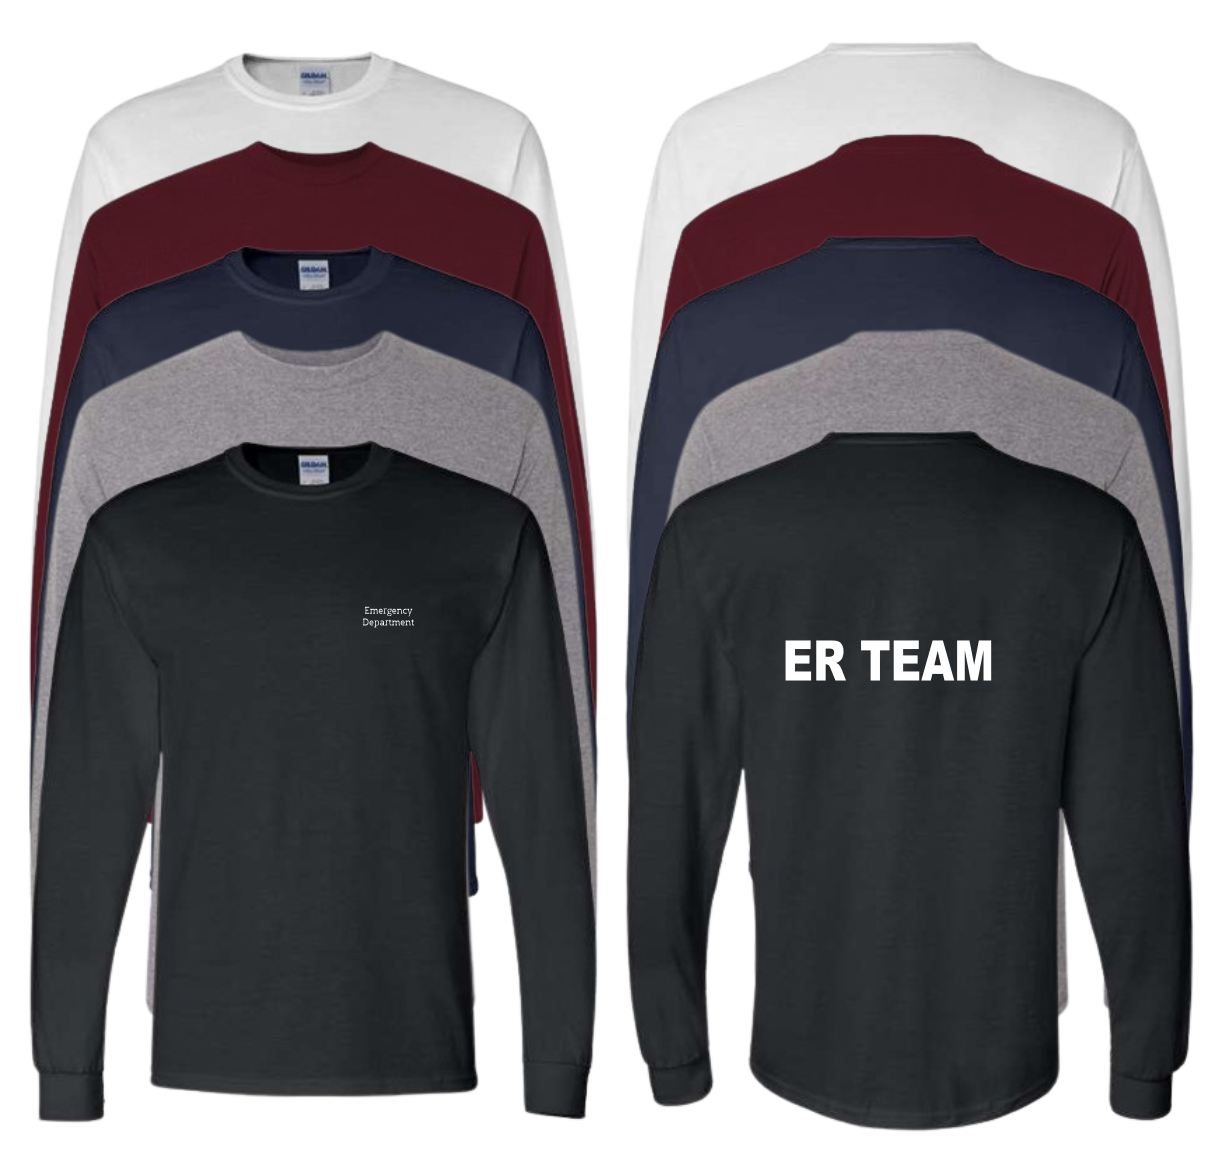 Emergency Department ER Team Cotton Long Sleeve T-Shirt (+ options)